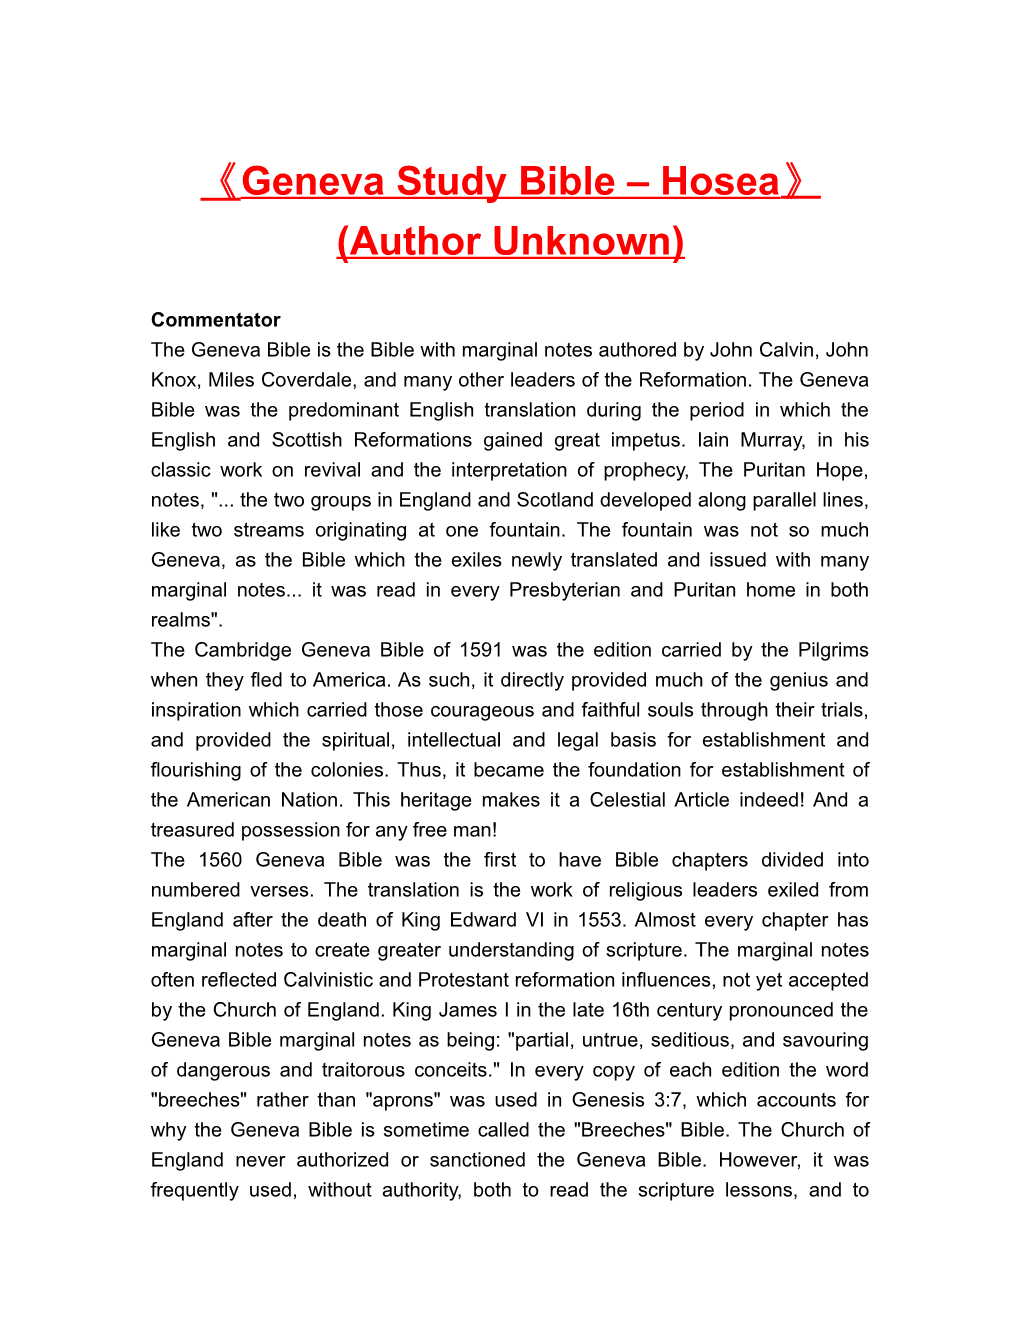 Geneva Study Bible Hosea (Author Unknown)